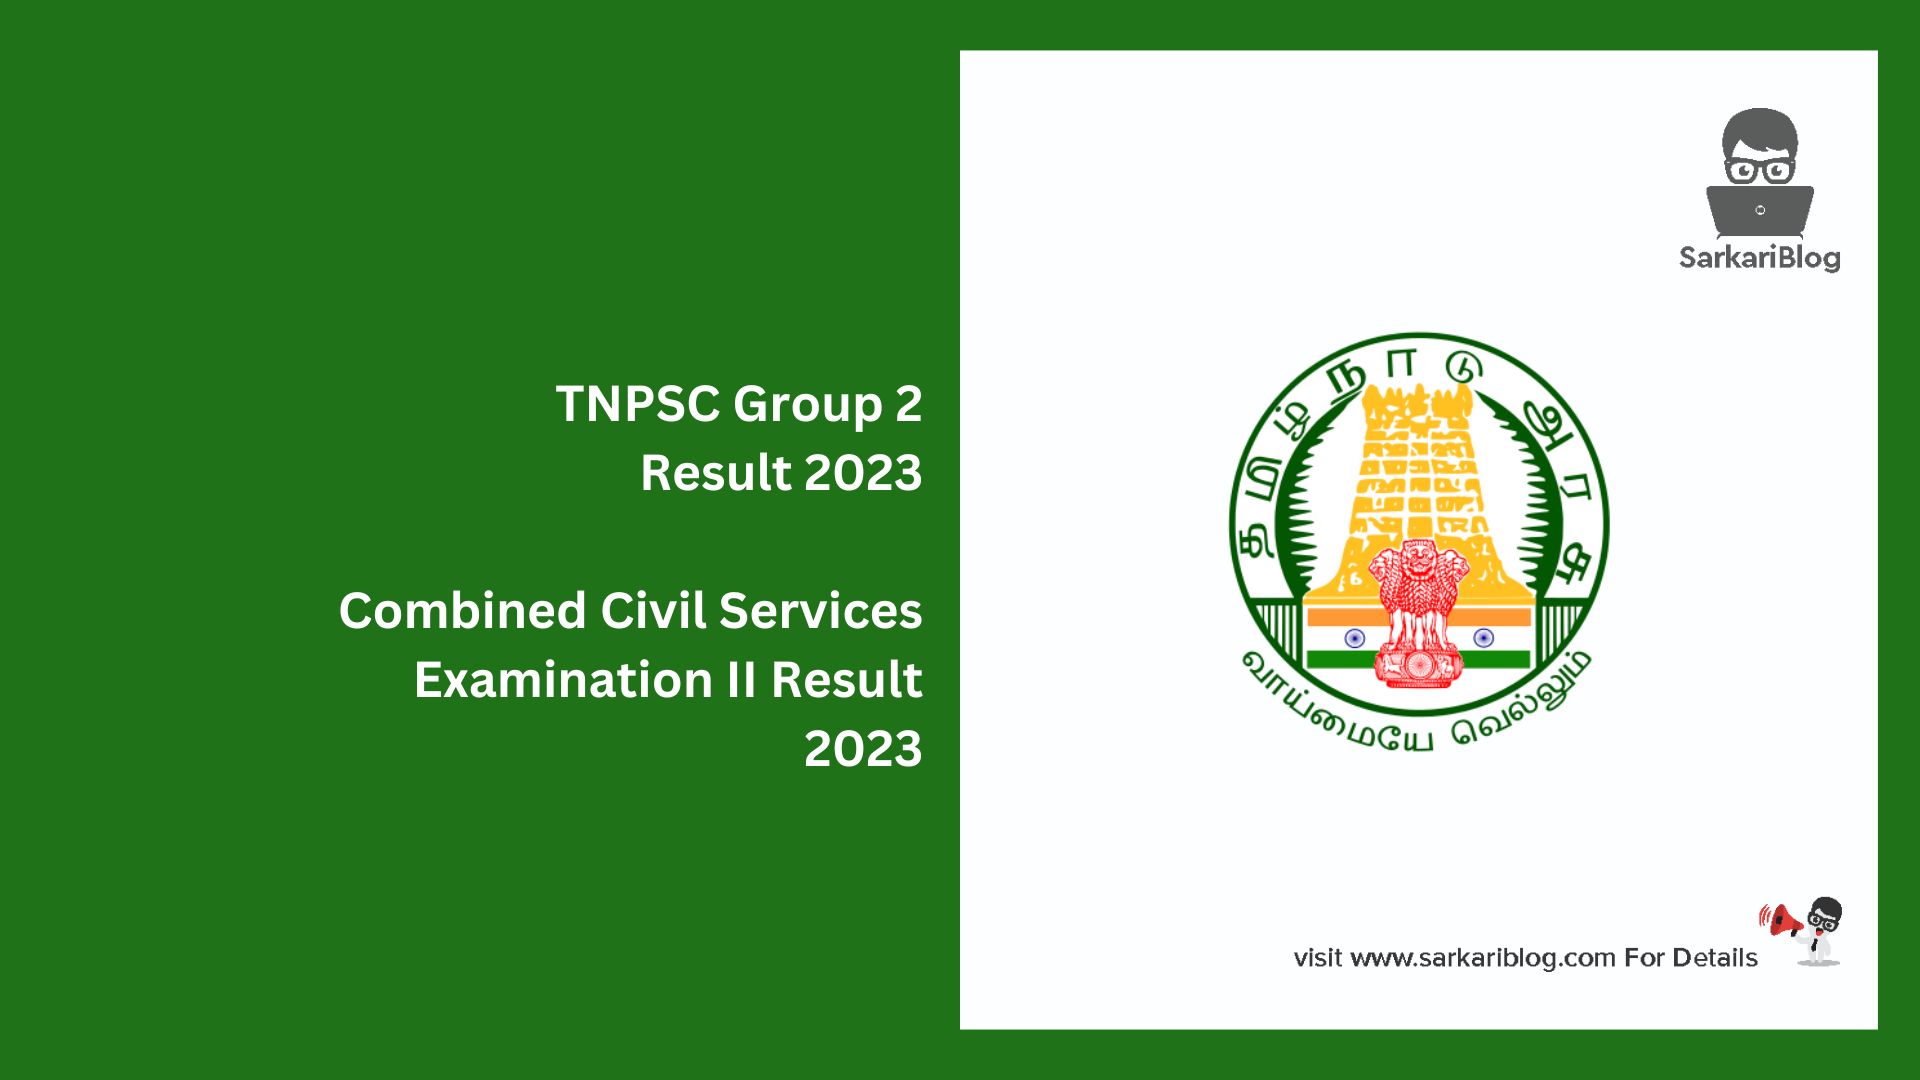 TNPSC Group 2 Result 2023